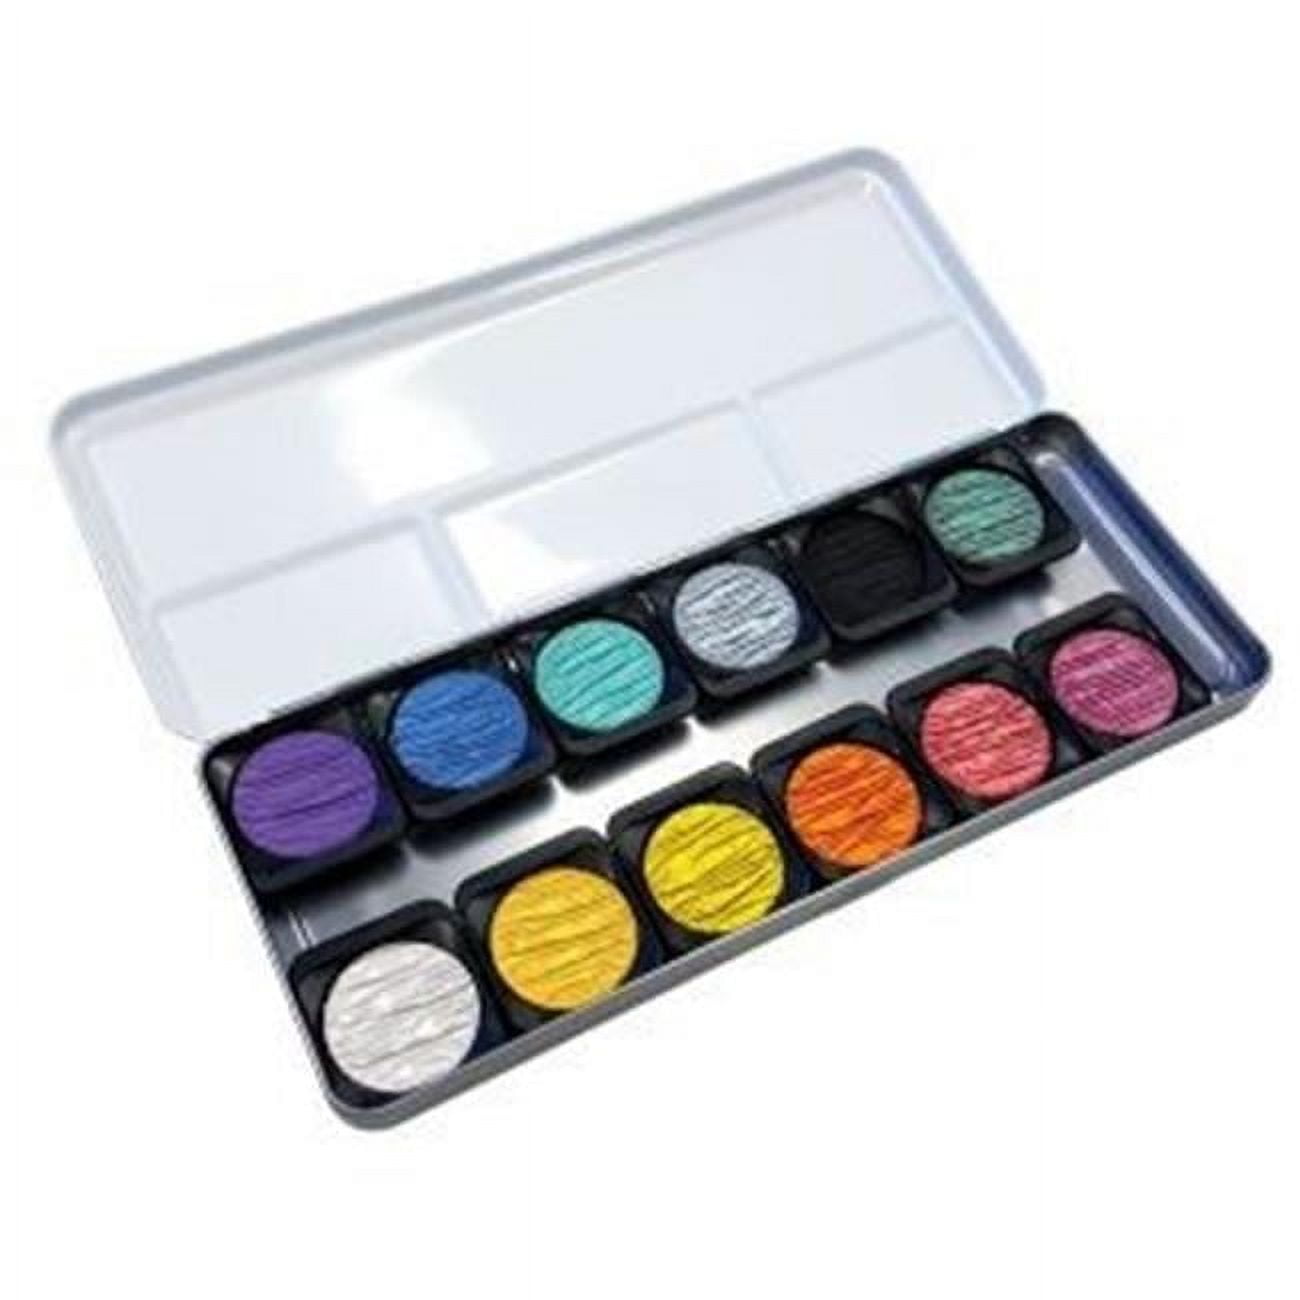 Iridescent Watercolor Paint Set, 12 Metallic Pearl Colors